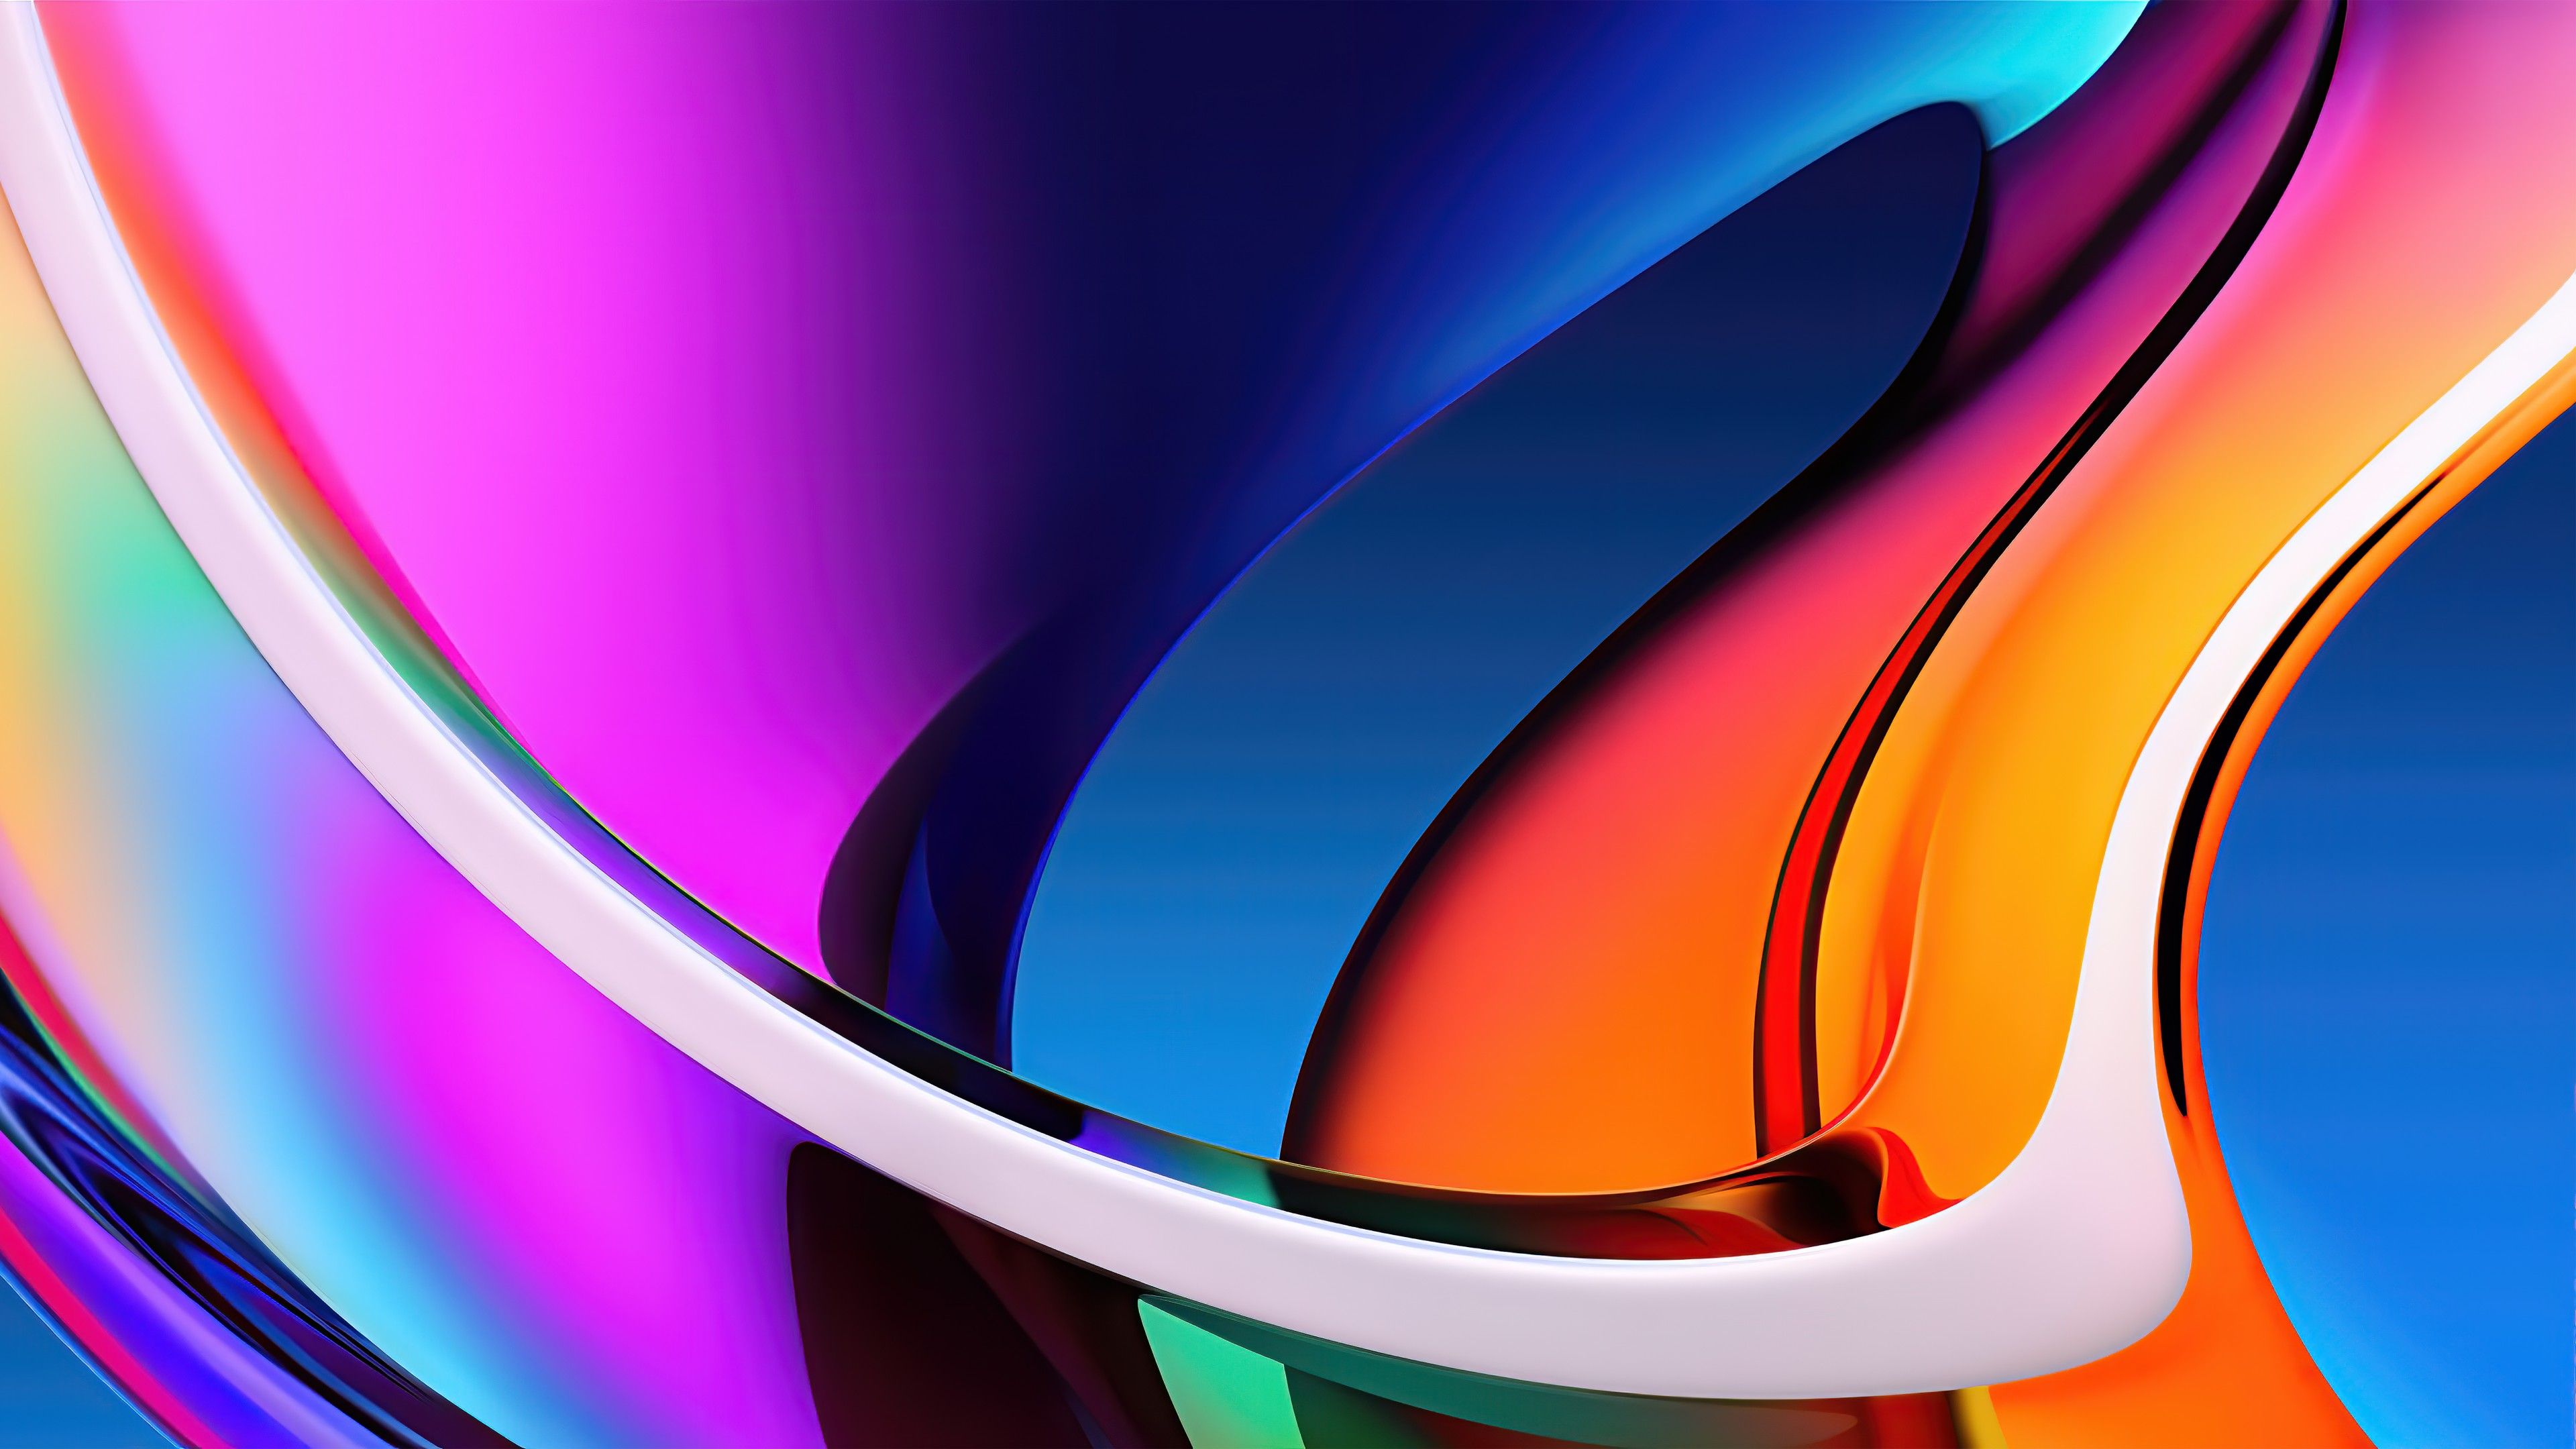 Apple iMac 4K Wallpaper, Colorful, Stock, Retina Display, Gradients, Aesthetic, 5K, 8K, Abstract